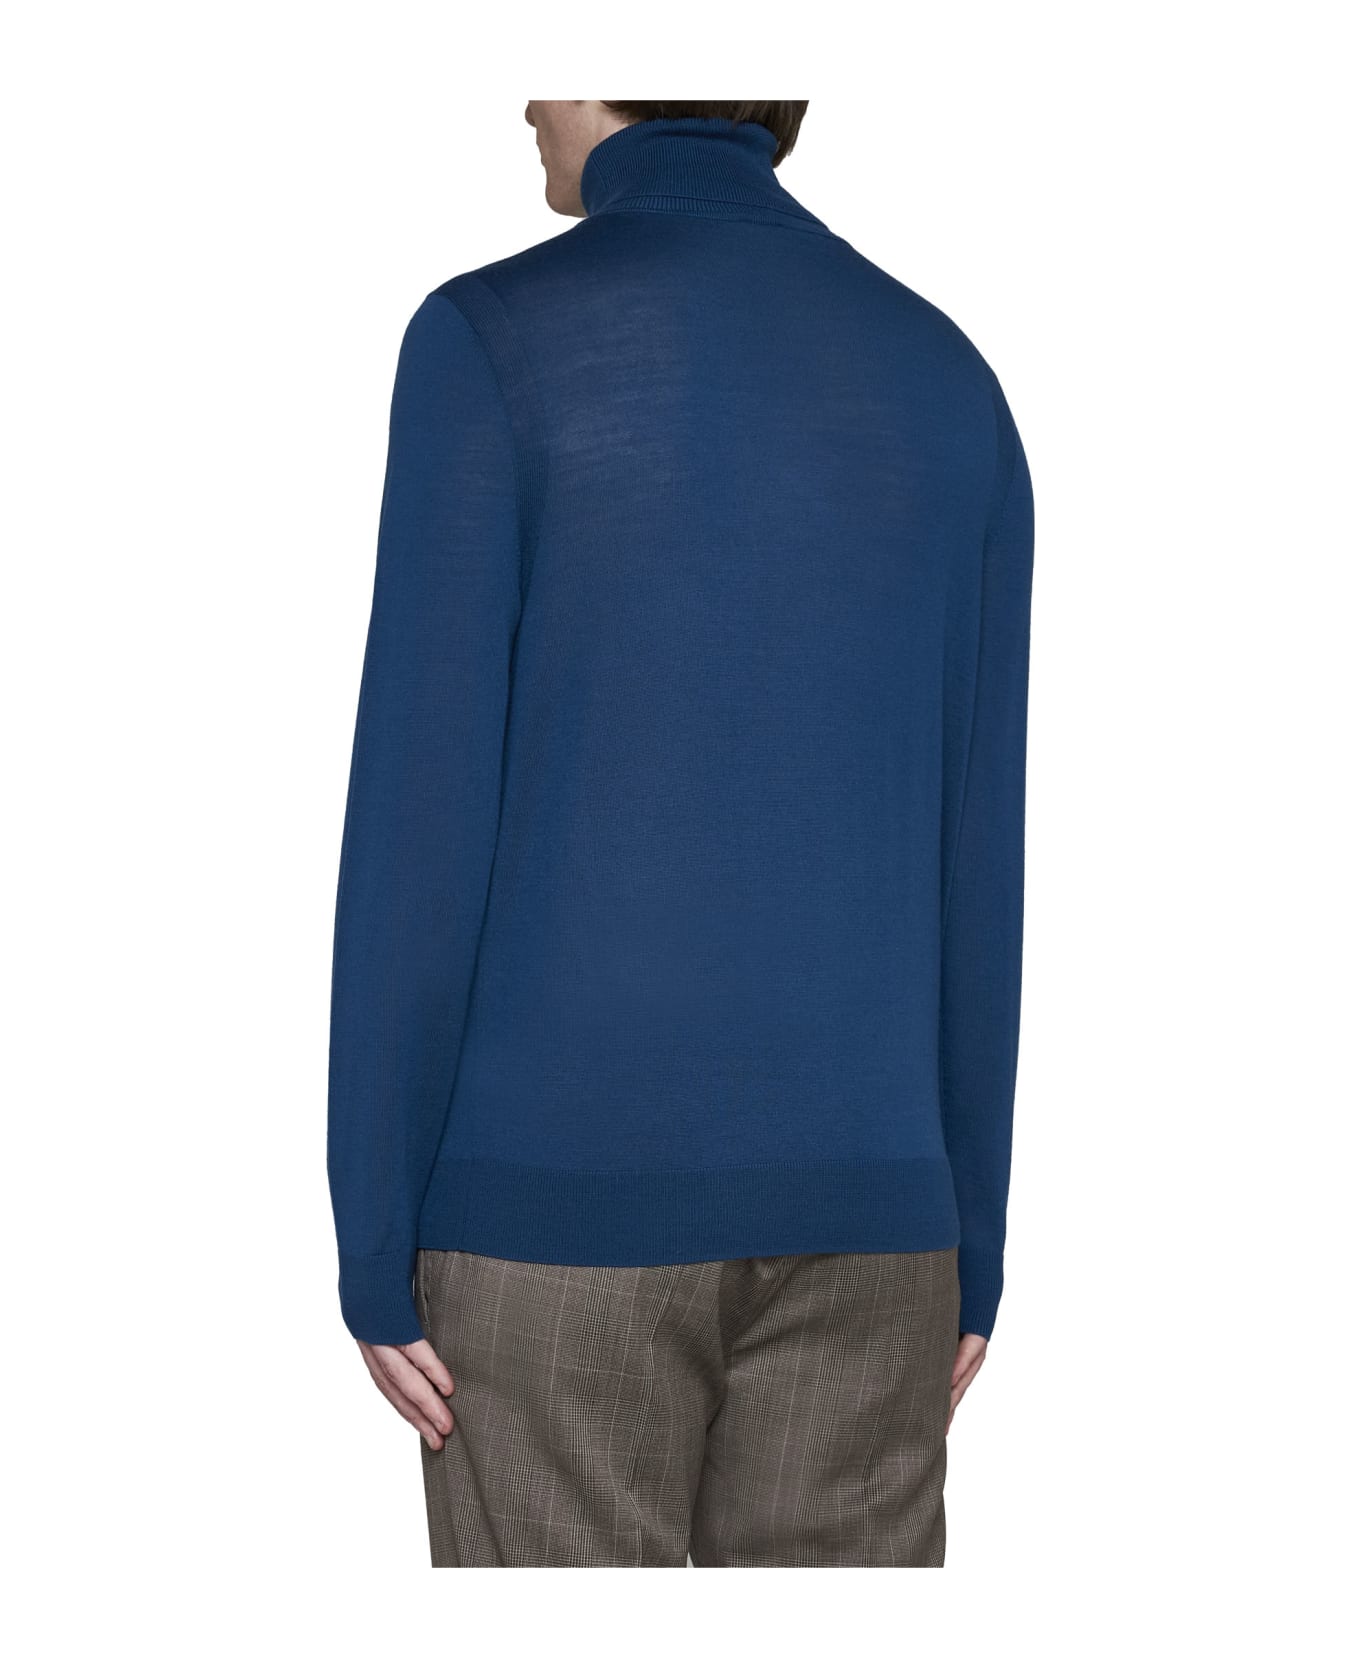 Paul Smith Sweater - Petrol blue